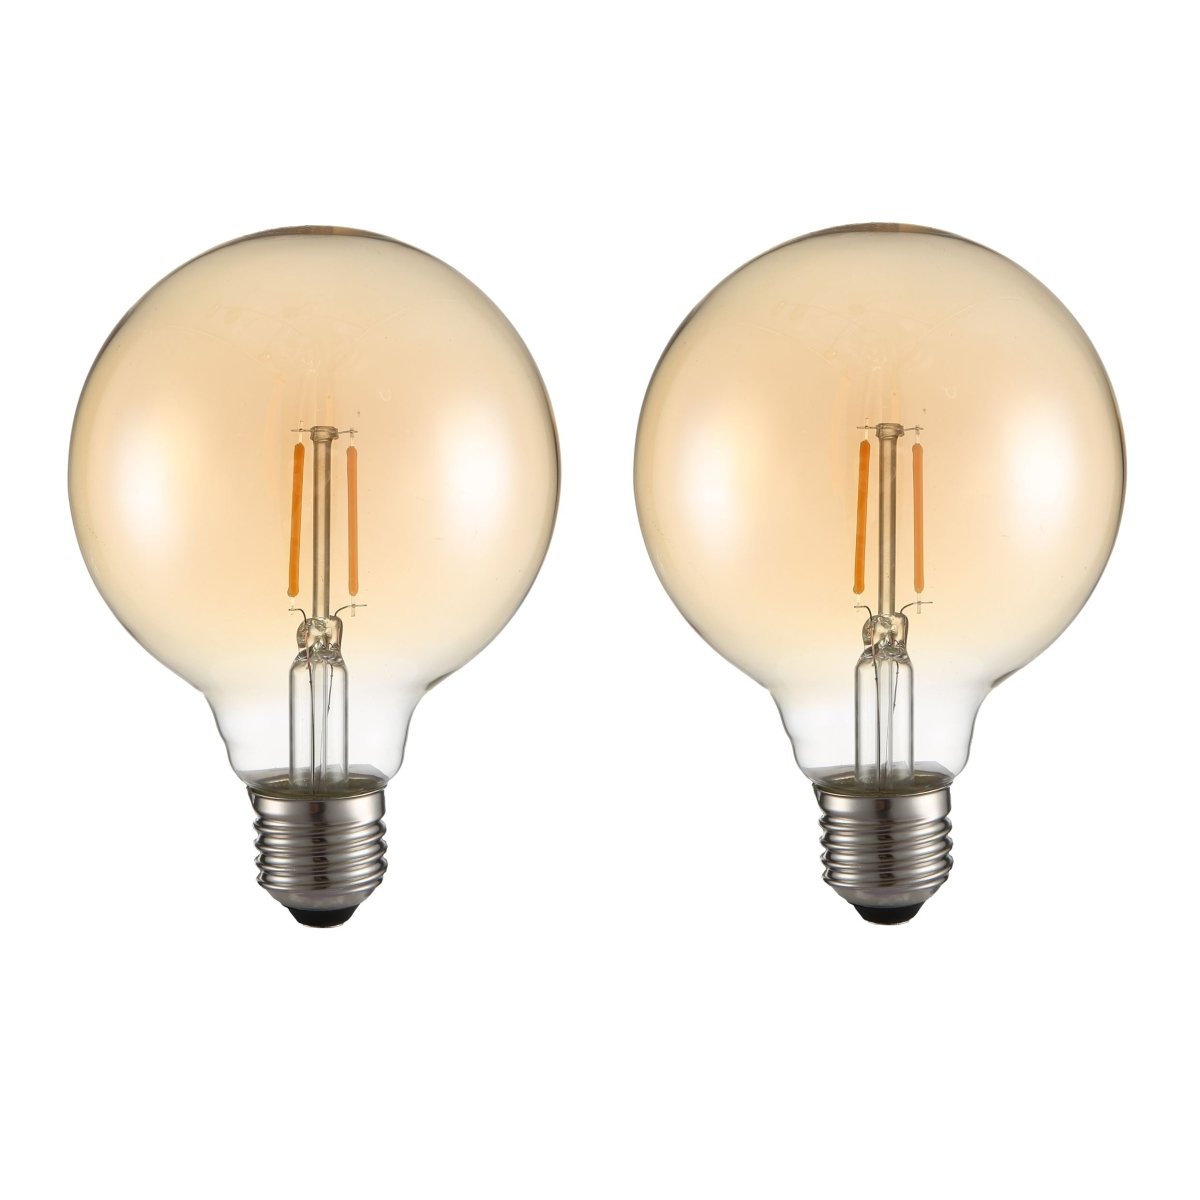 LED Filament Globe Bulb E27 Edison Screw Warm White 2400K G95 2w pack of 2